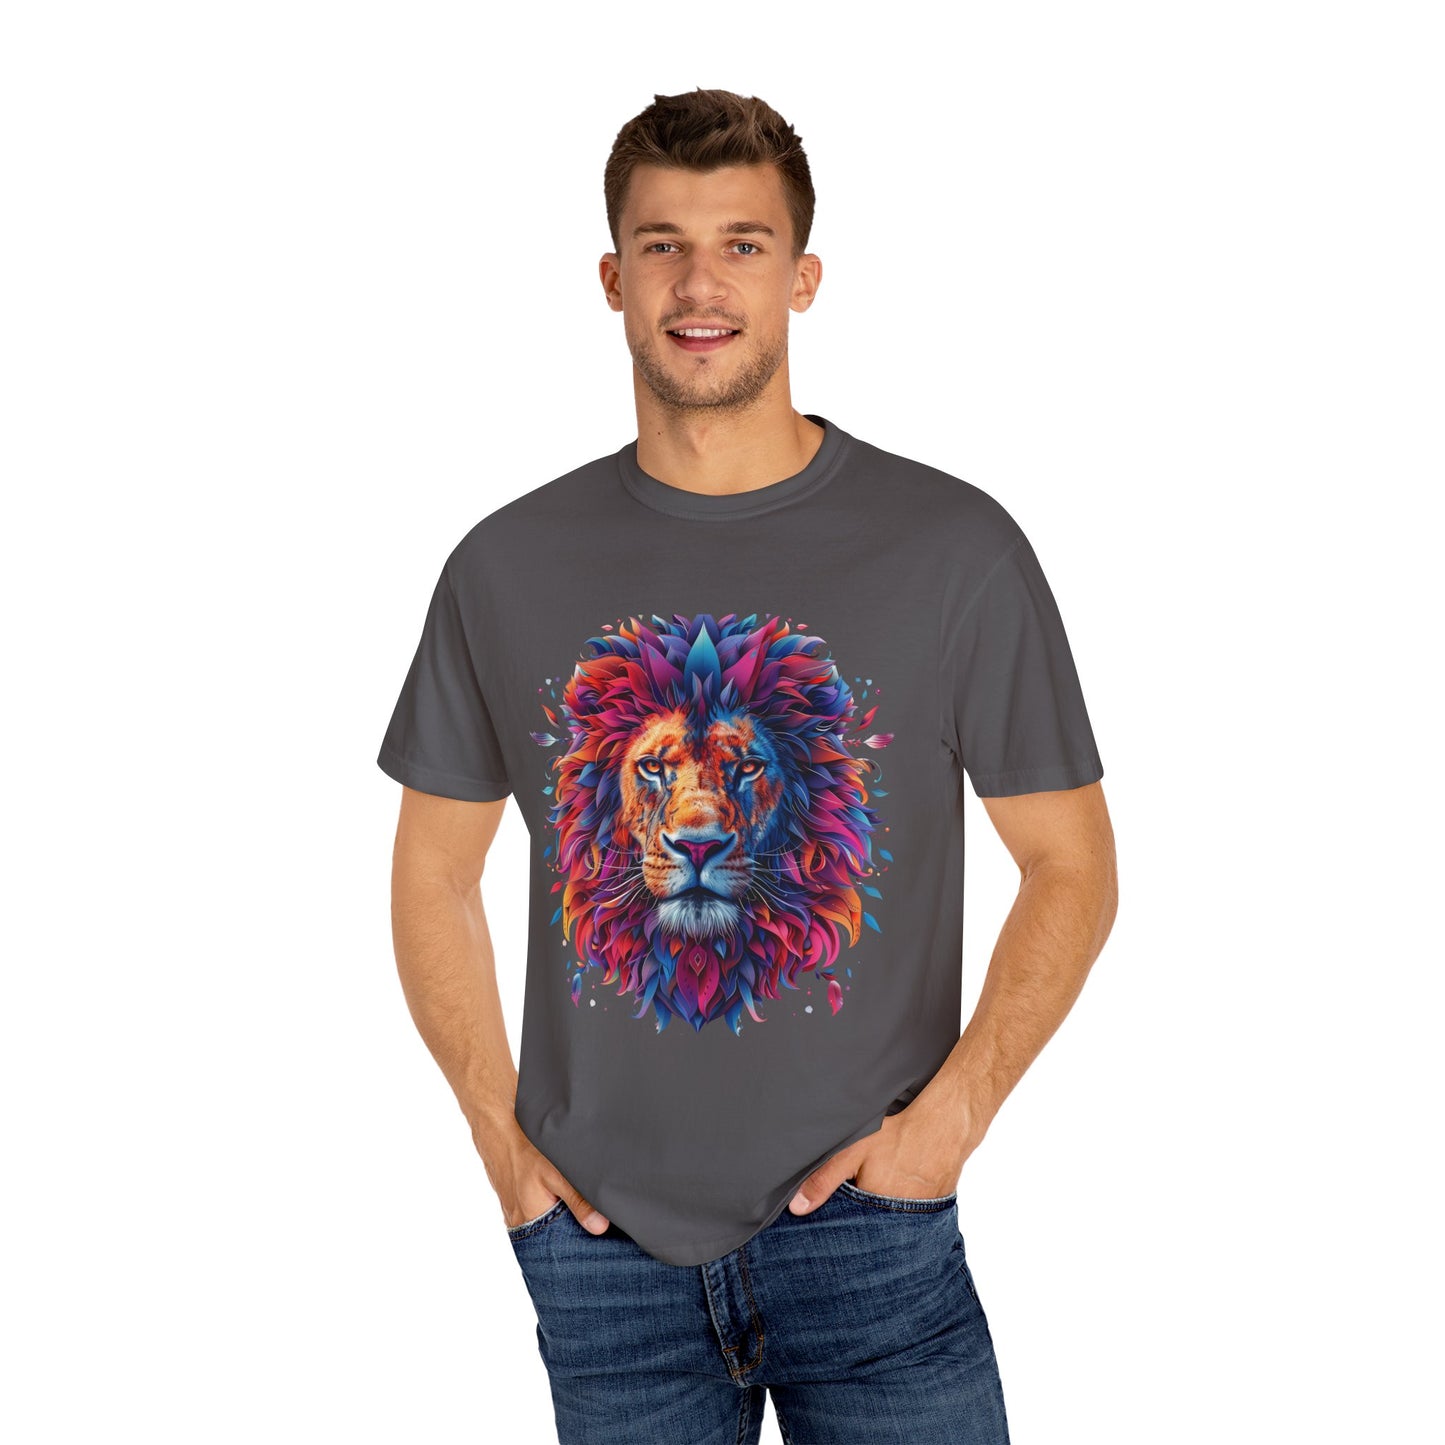 Lion Head Cool Graphic Design Novelty Unisex Garment-dyed T-shirt Cotton Funny Humorous Graphic Soft Premium Unisex Men Women Graphite T-shirt Birthday Gift-39